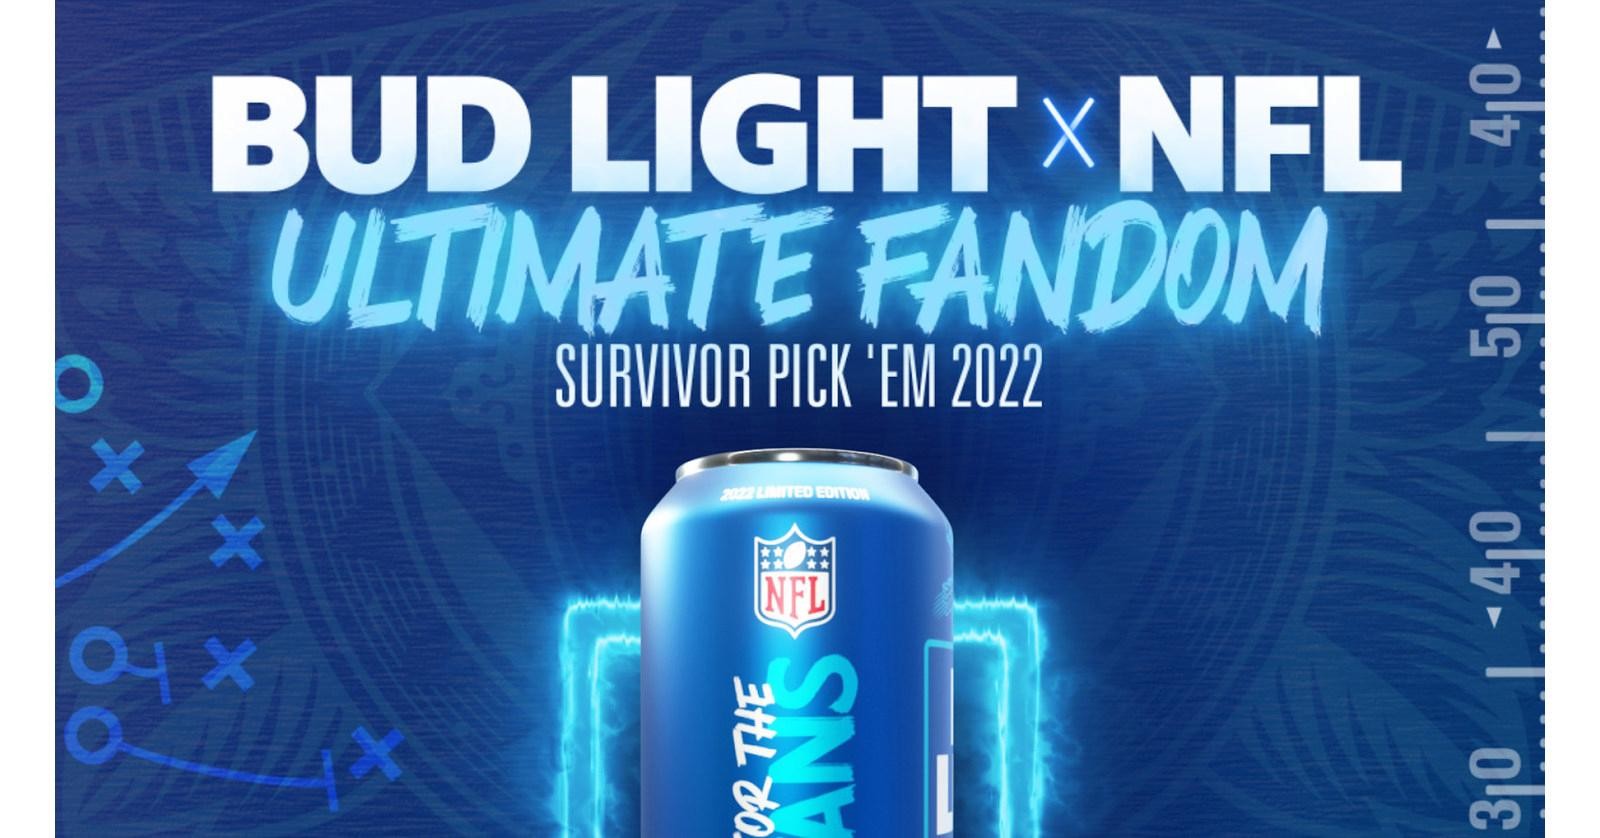 Bud Light x NFL Ultimate Fandom